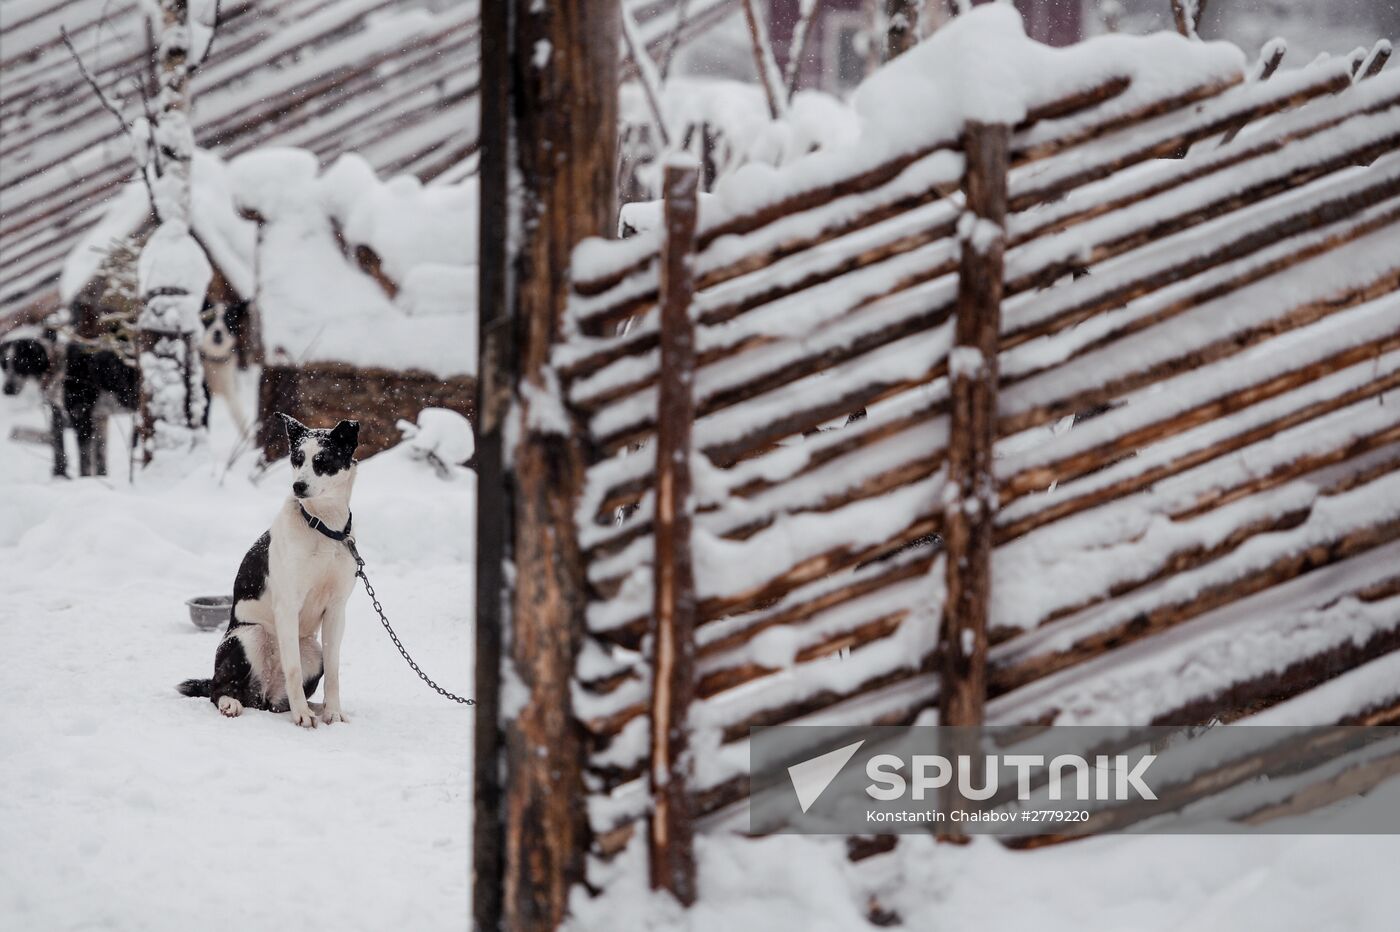 Sled dog breeding facilities in Karelia